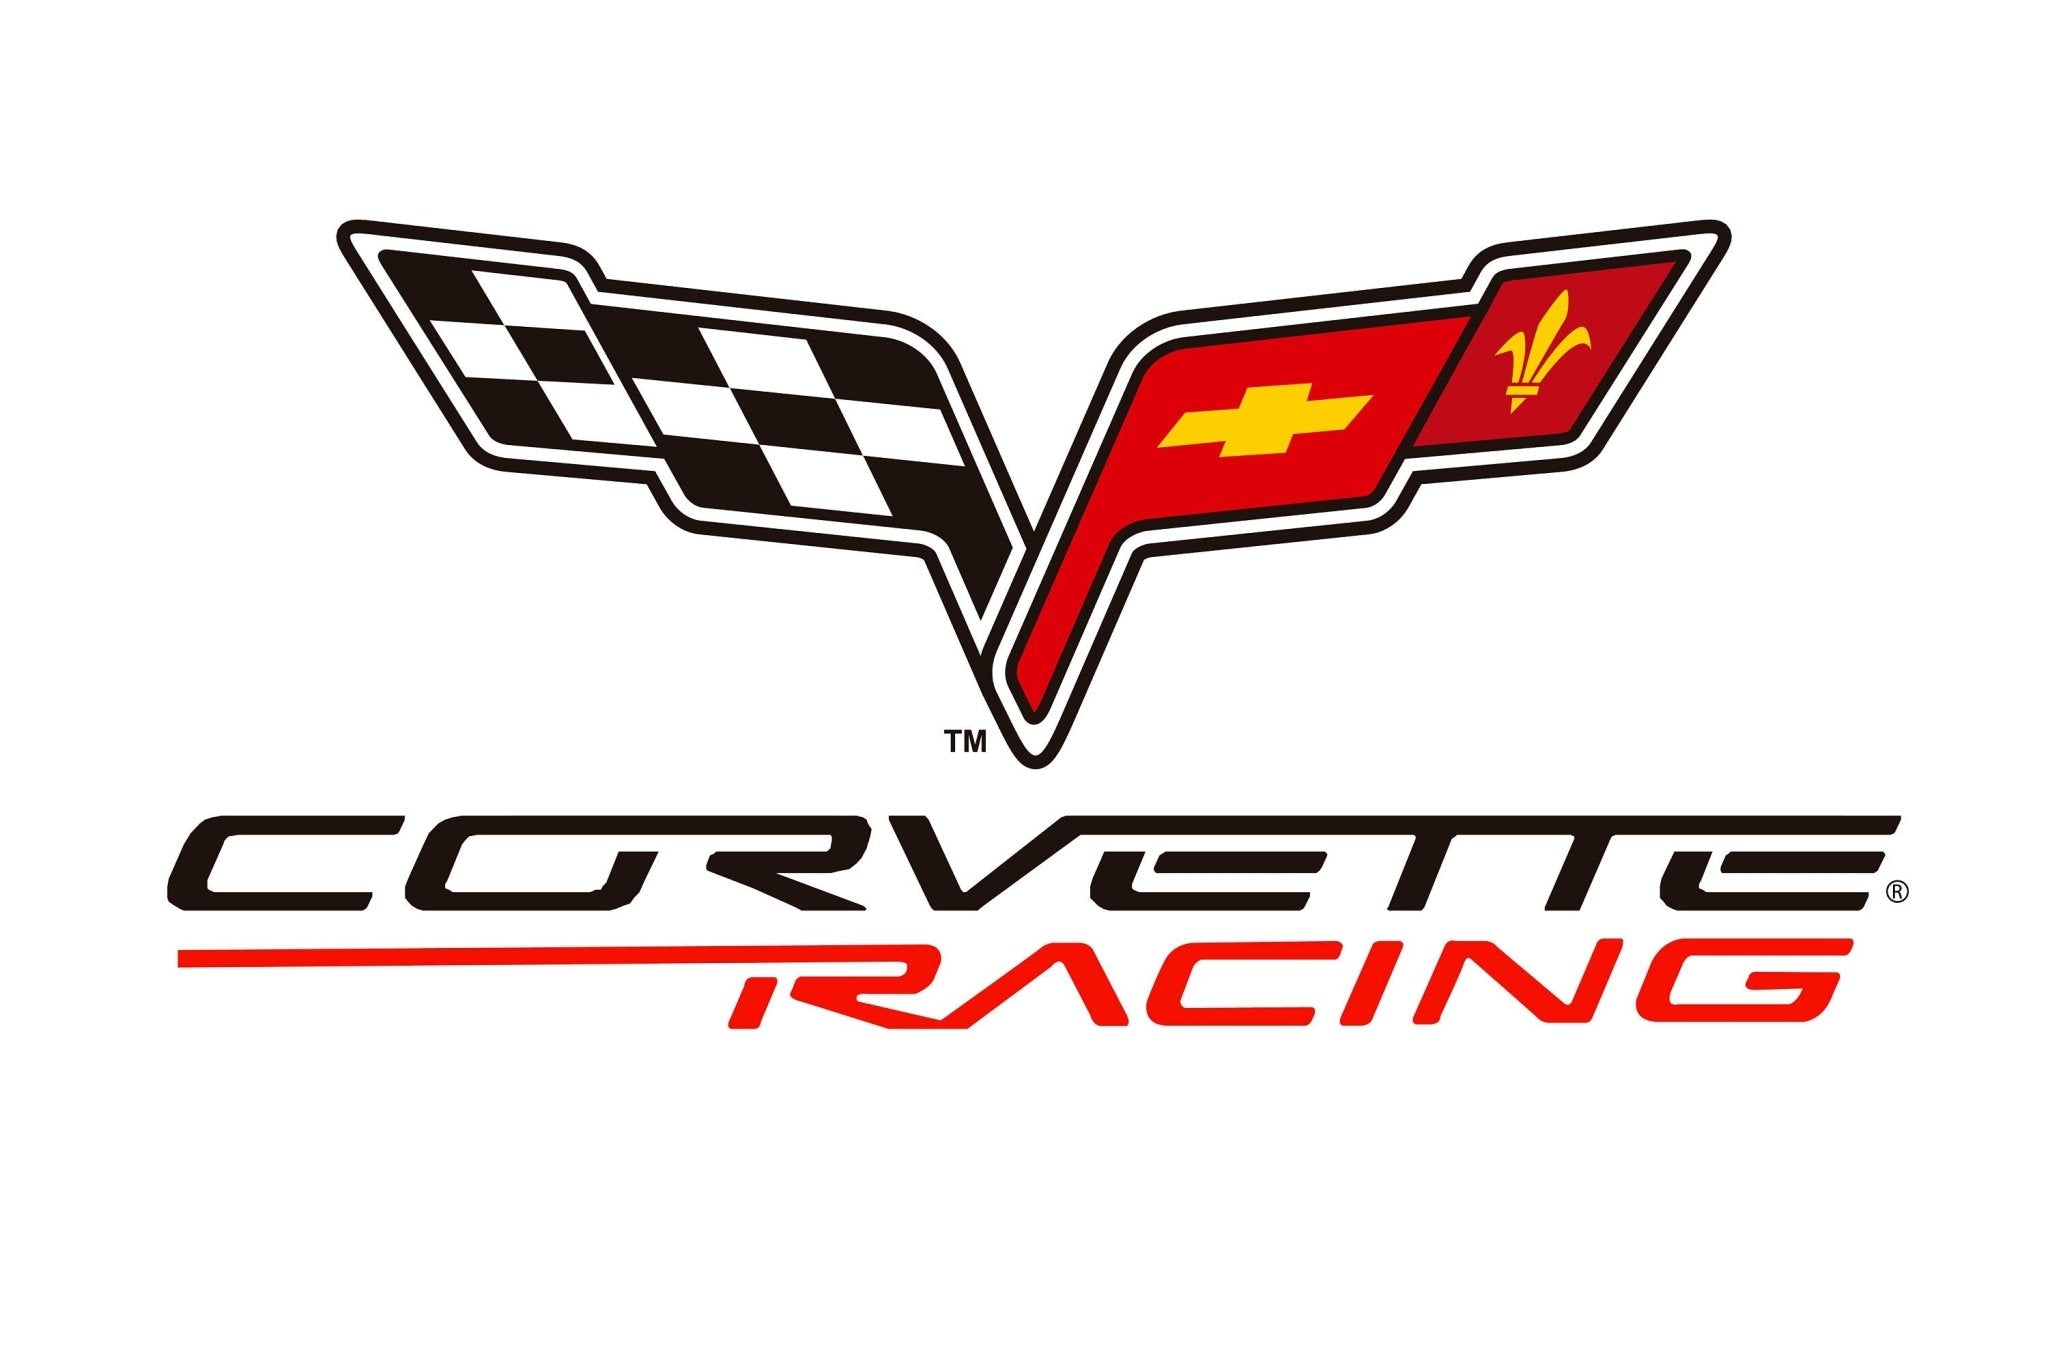 Corvette C6 Racing Logo Instant Download, Vector, Car, Emblem, SVG, Cut File, Print, Digital, Scrapbooking, Cameo, Cricut - Vette1 - C6 Downloads